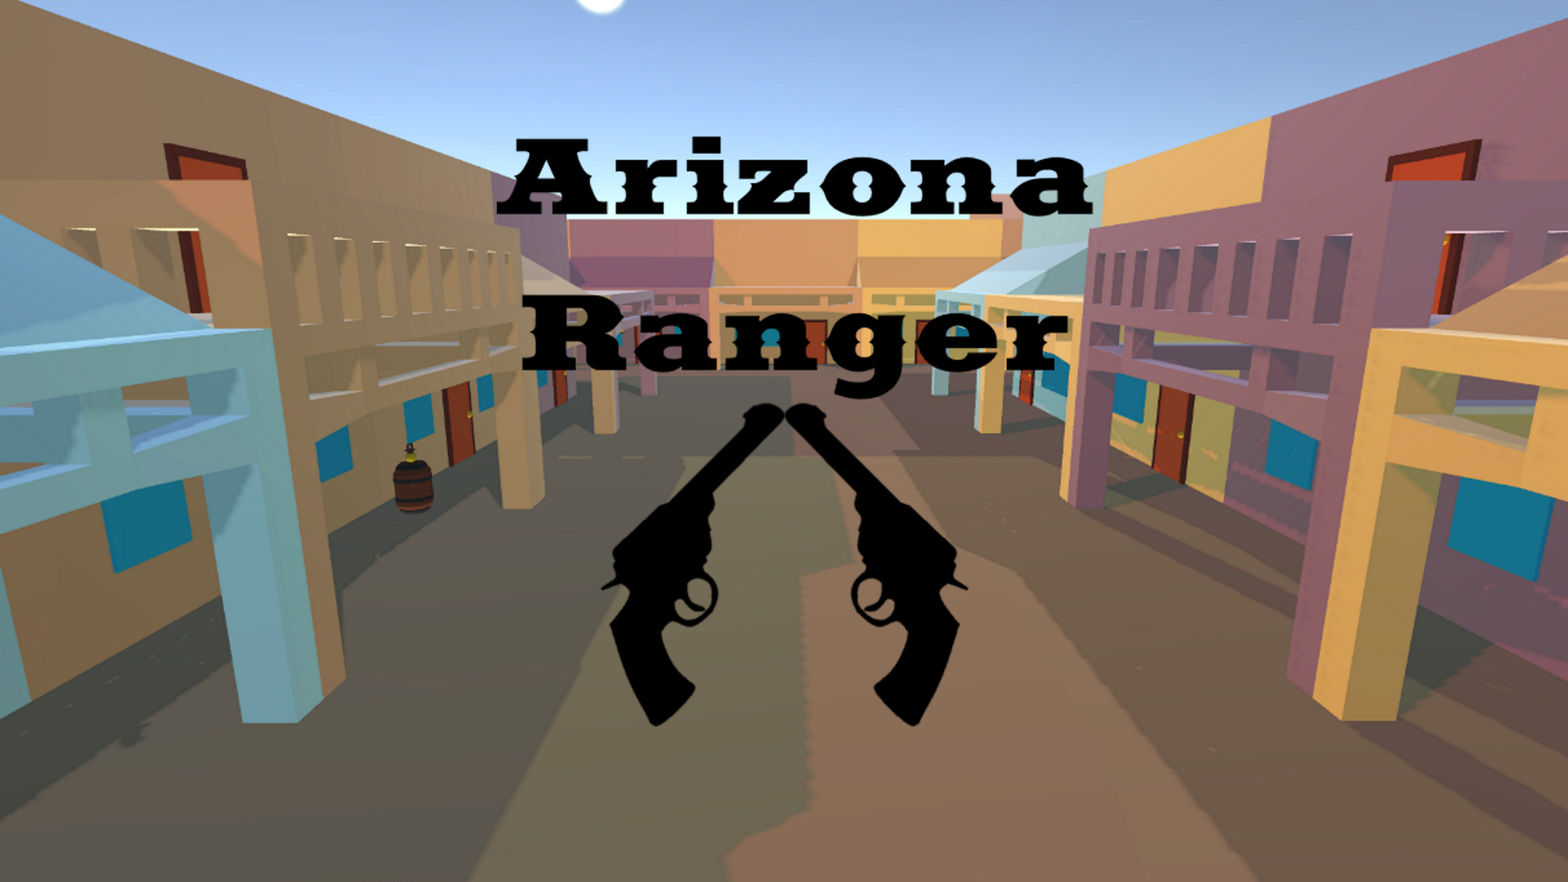 Arizona Ranger